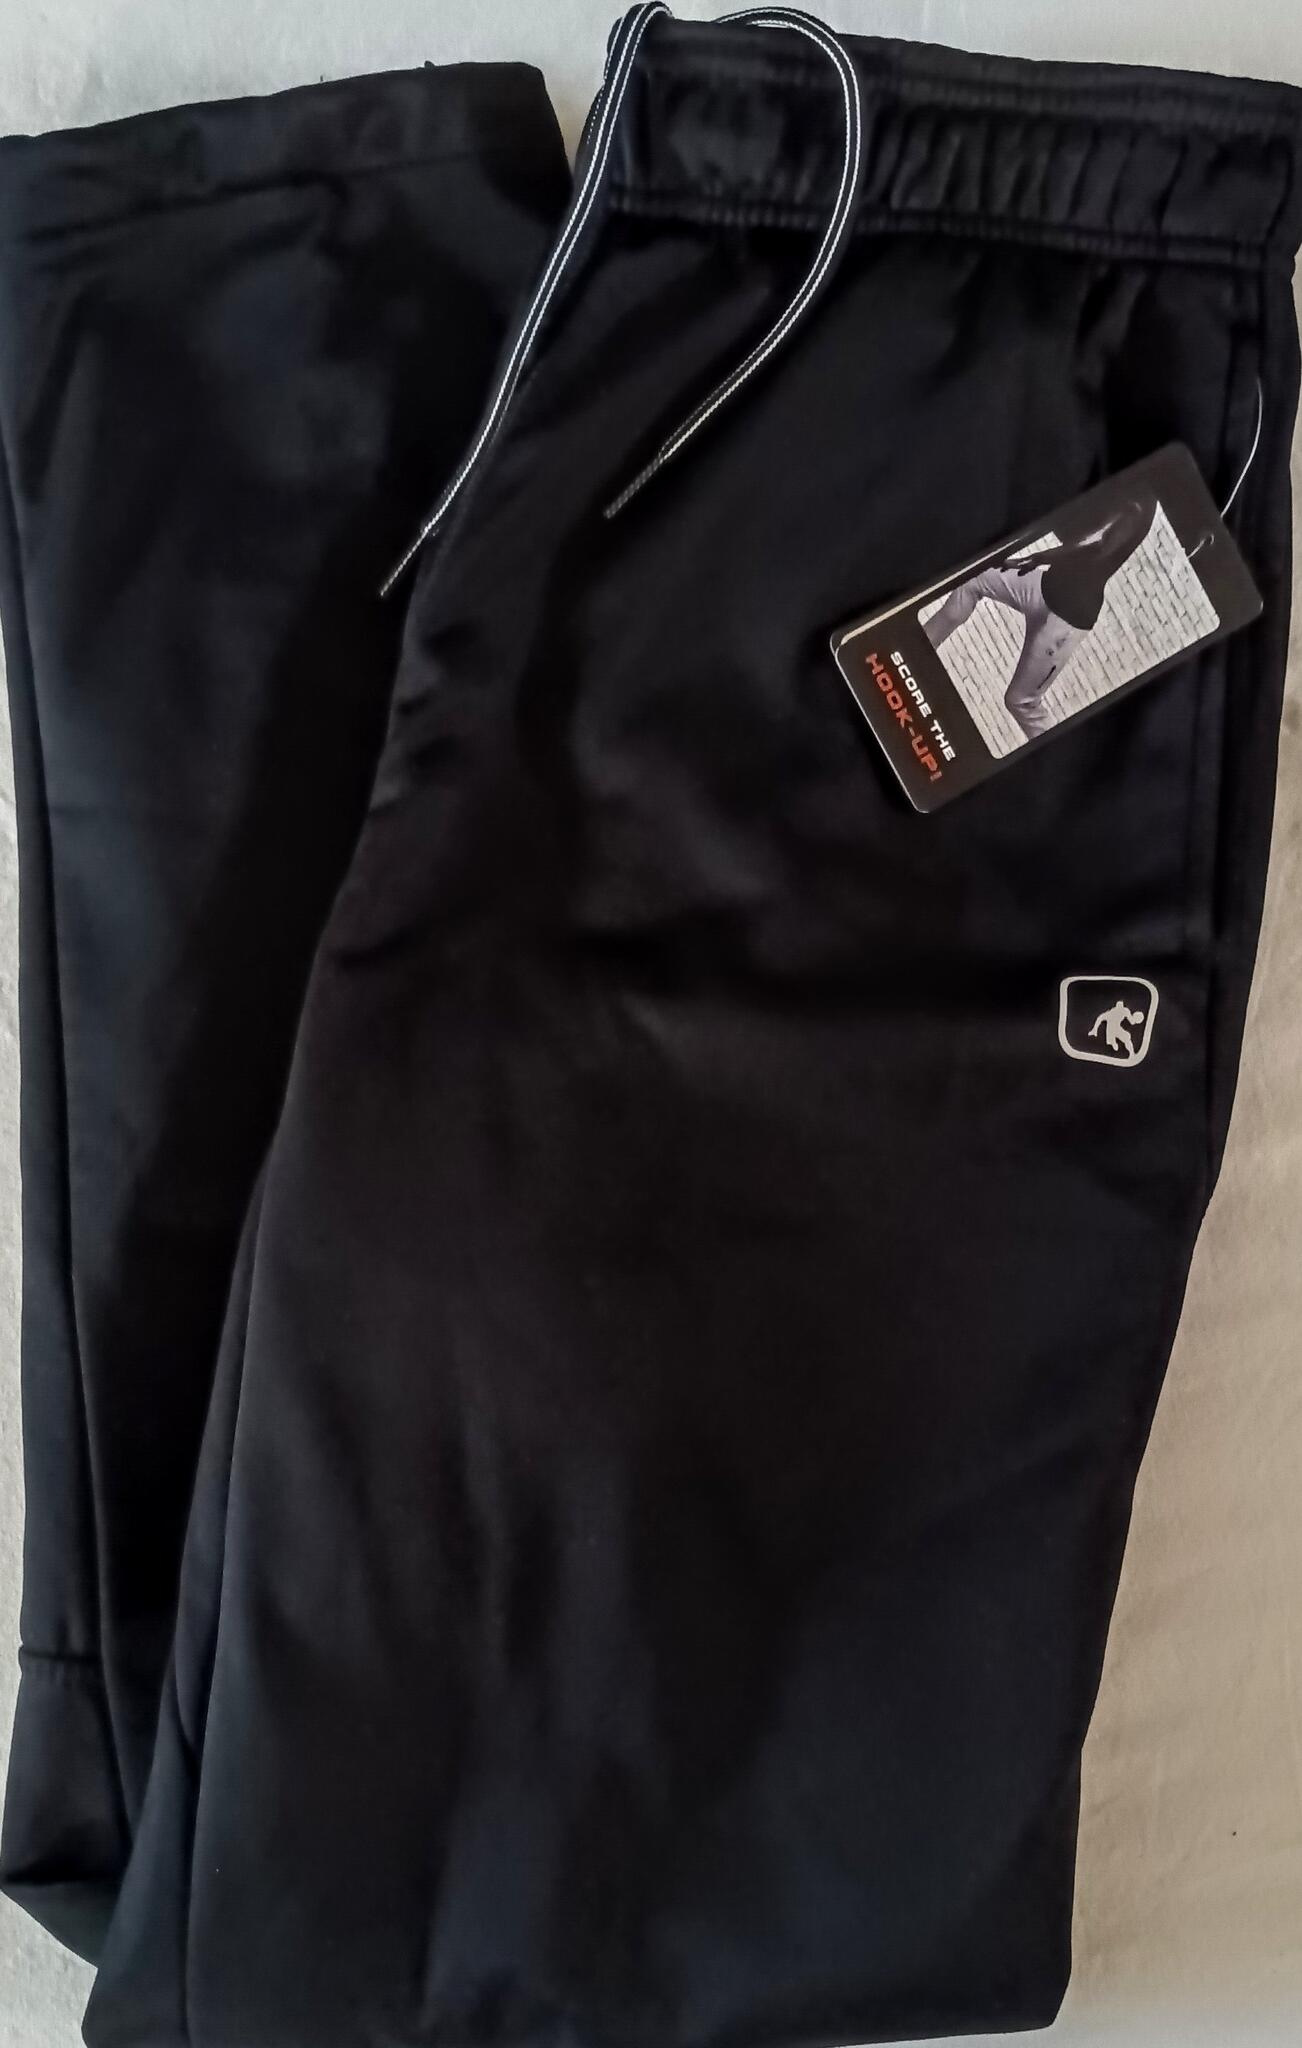 Louisville High School | On Demand | Embroidered Unisex Fleece Sweatpants -  Black / XS